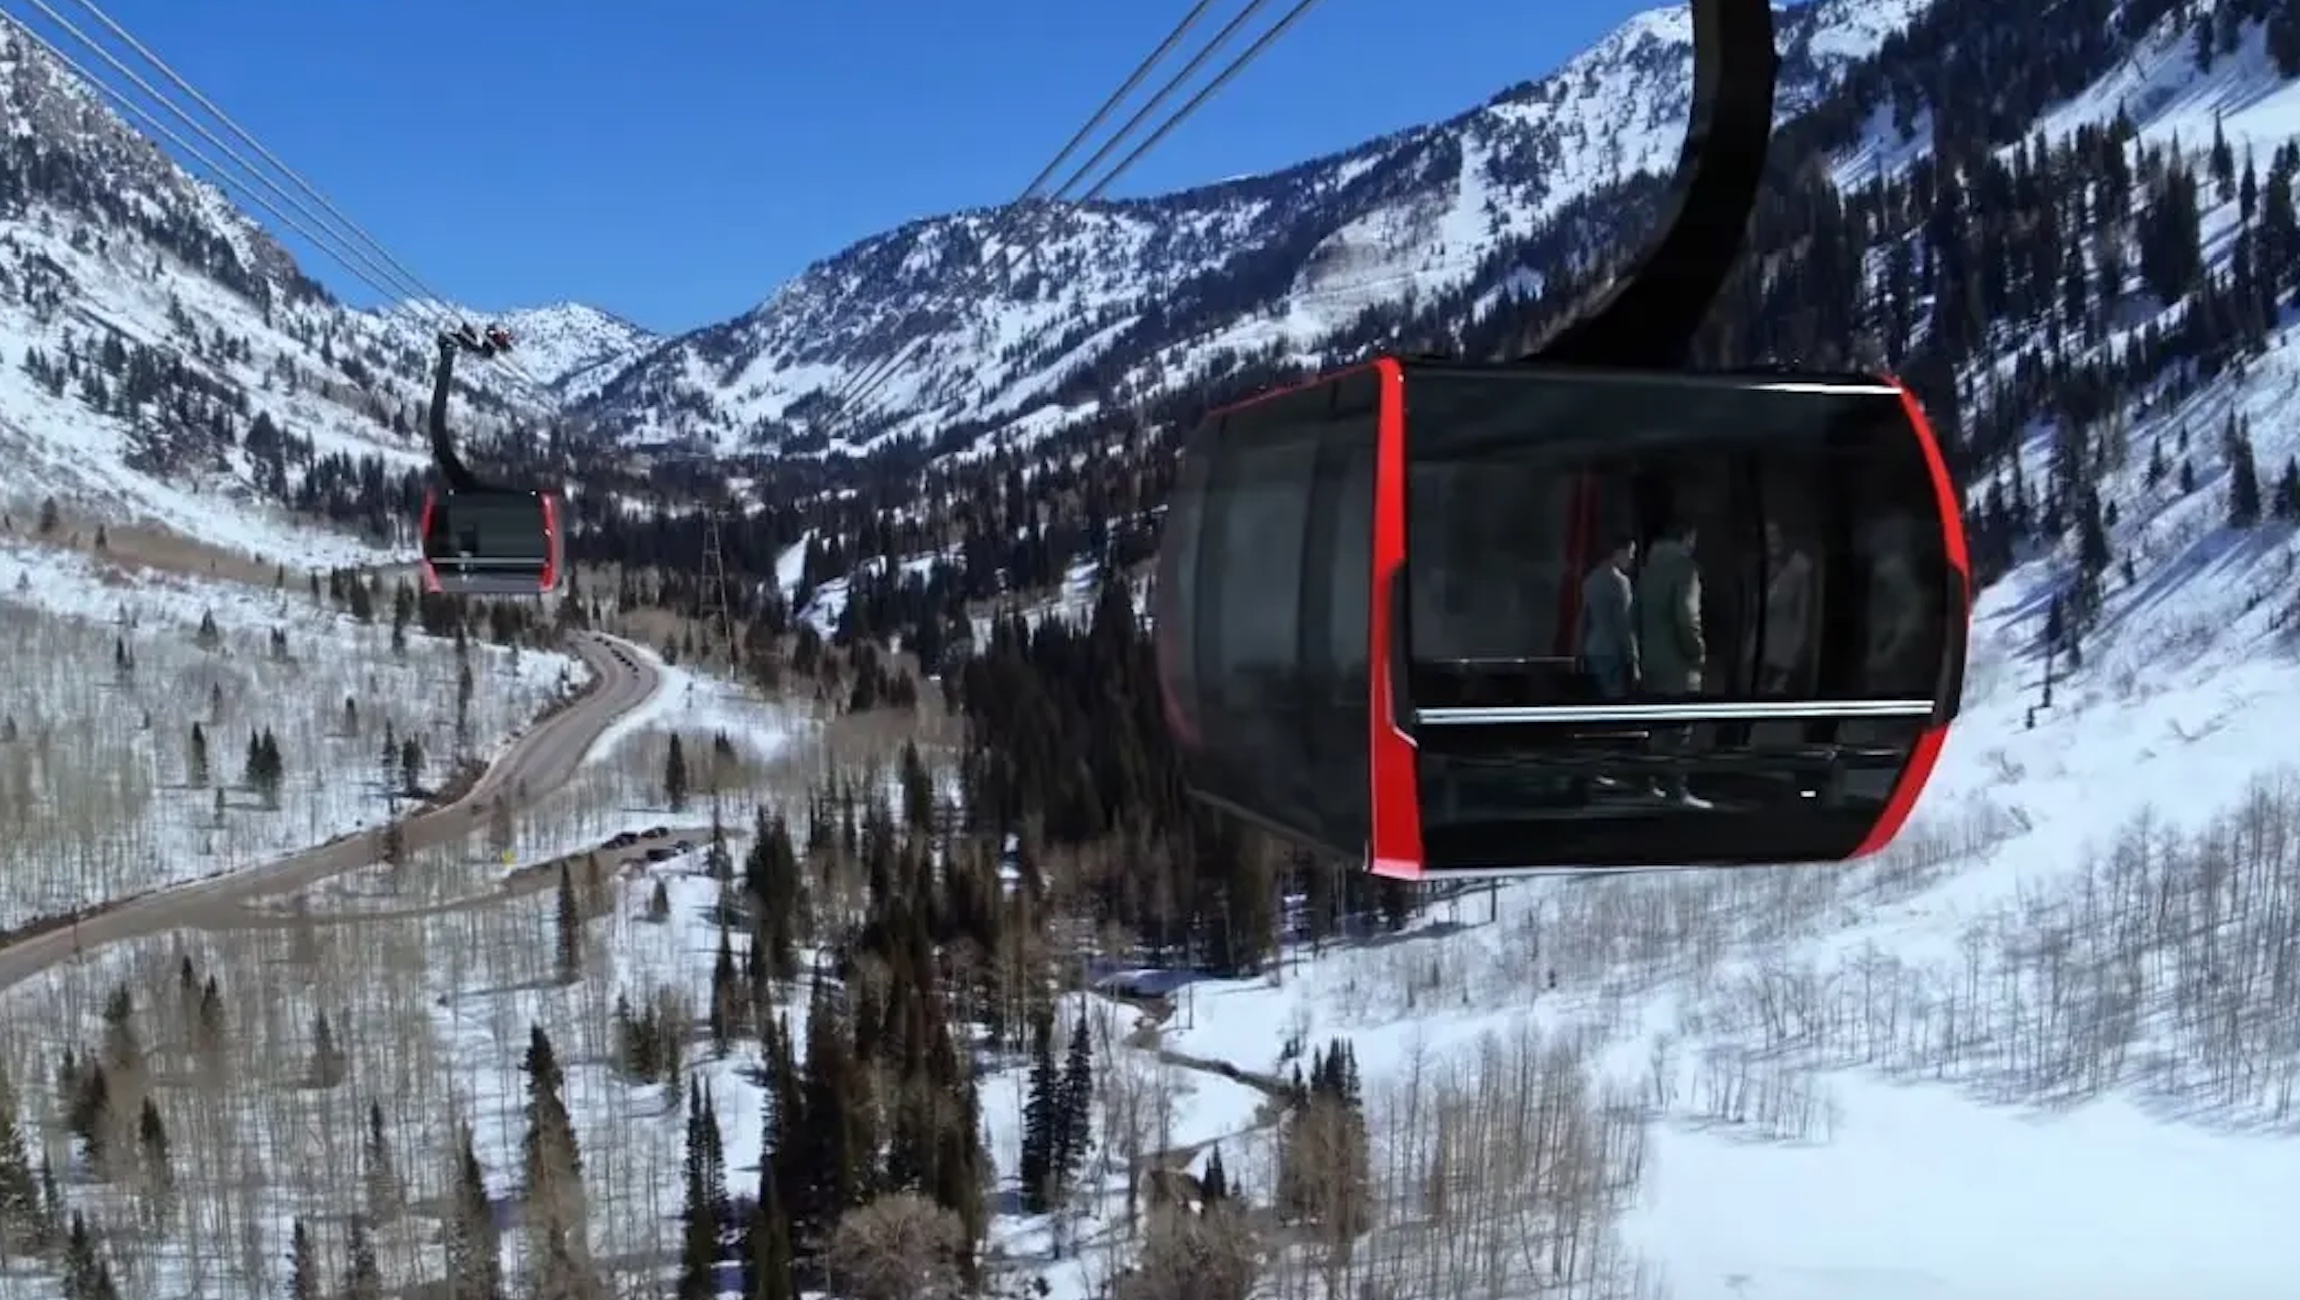 Salt Lake Resident Gives 6 Point Argument Against The Little Cottonwood Gondola Project